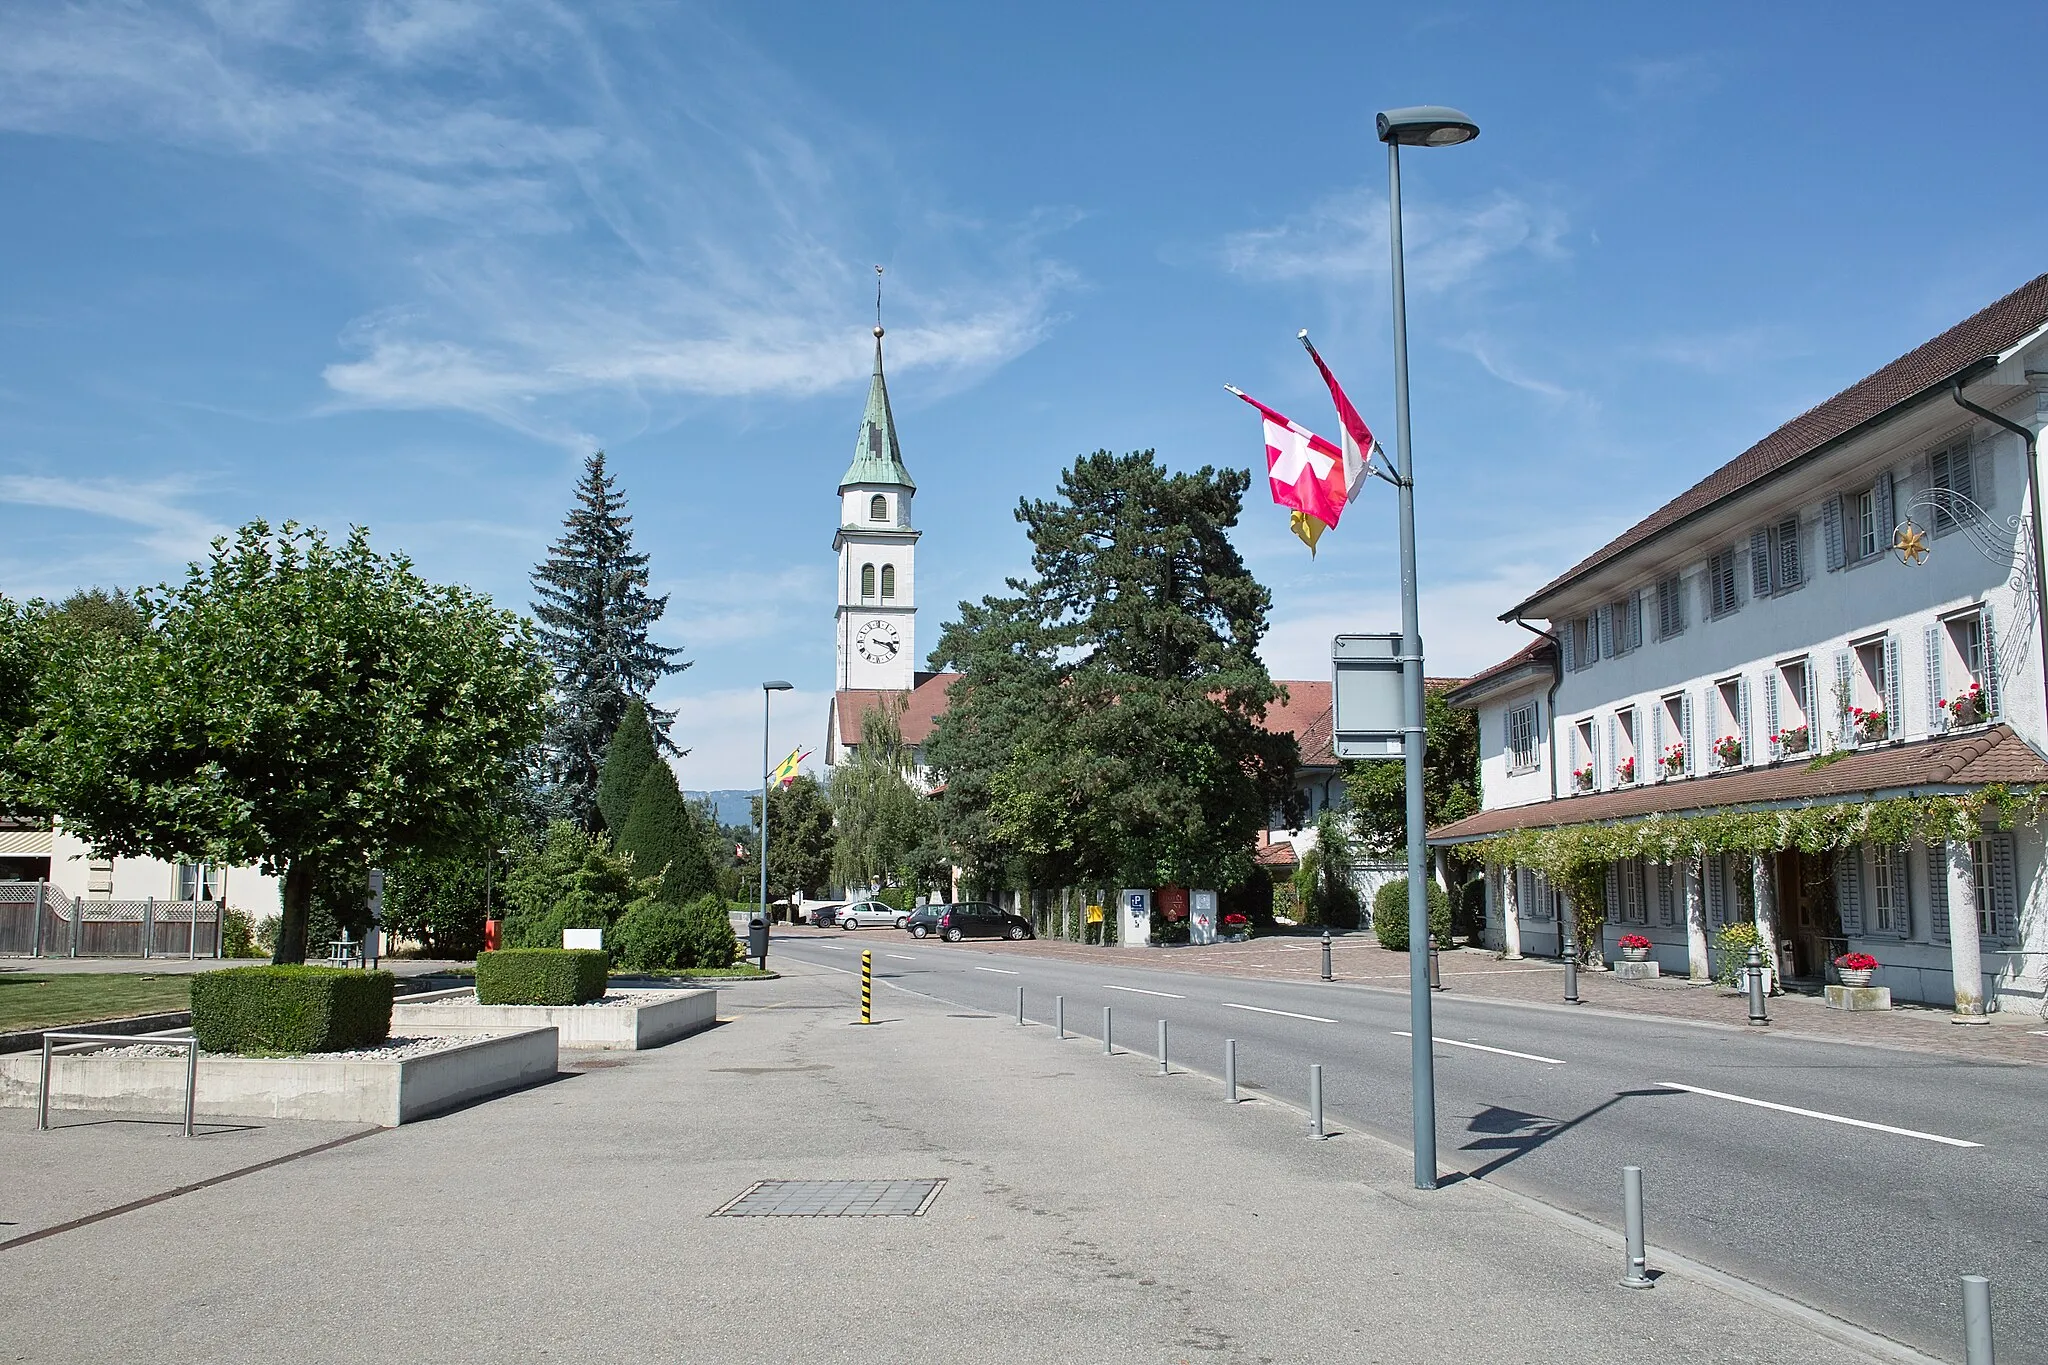 Photo showing: Municipality of Kriegstetten, canton of Solothurn, Switzerland. Parish church of St. Mauritius.